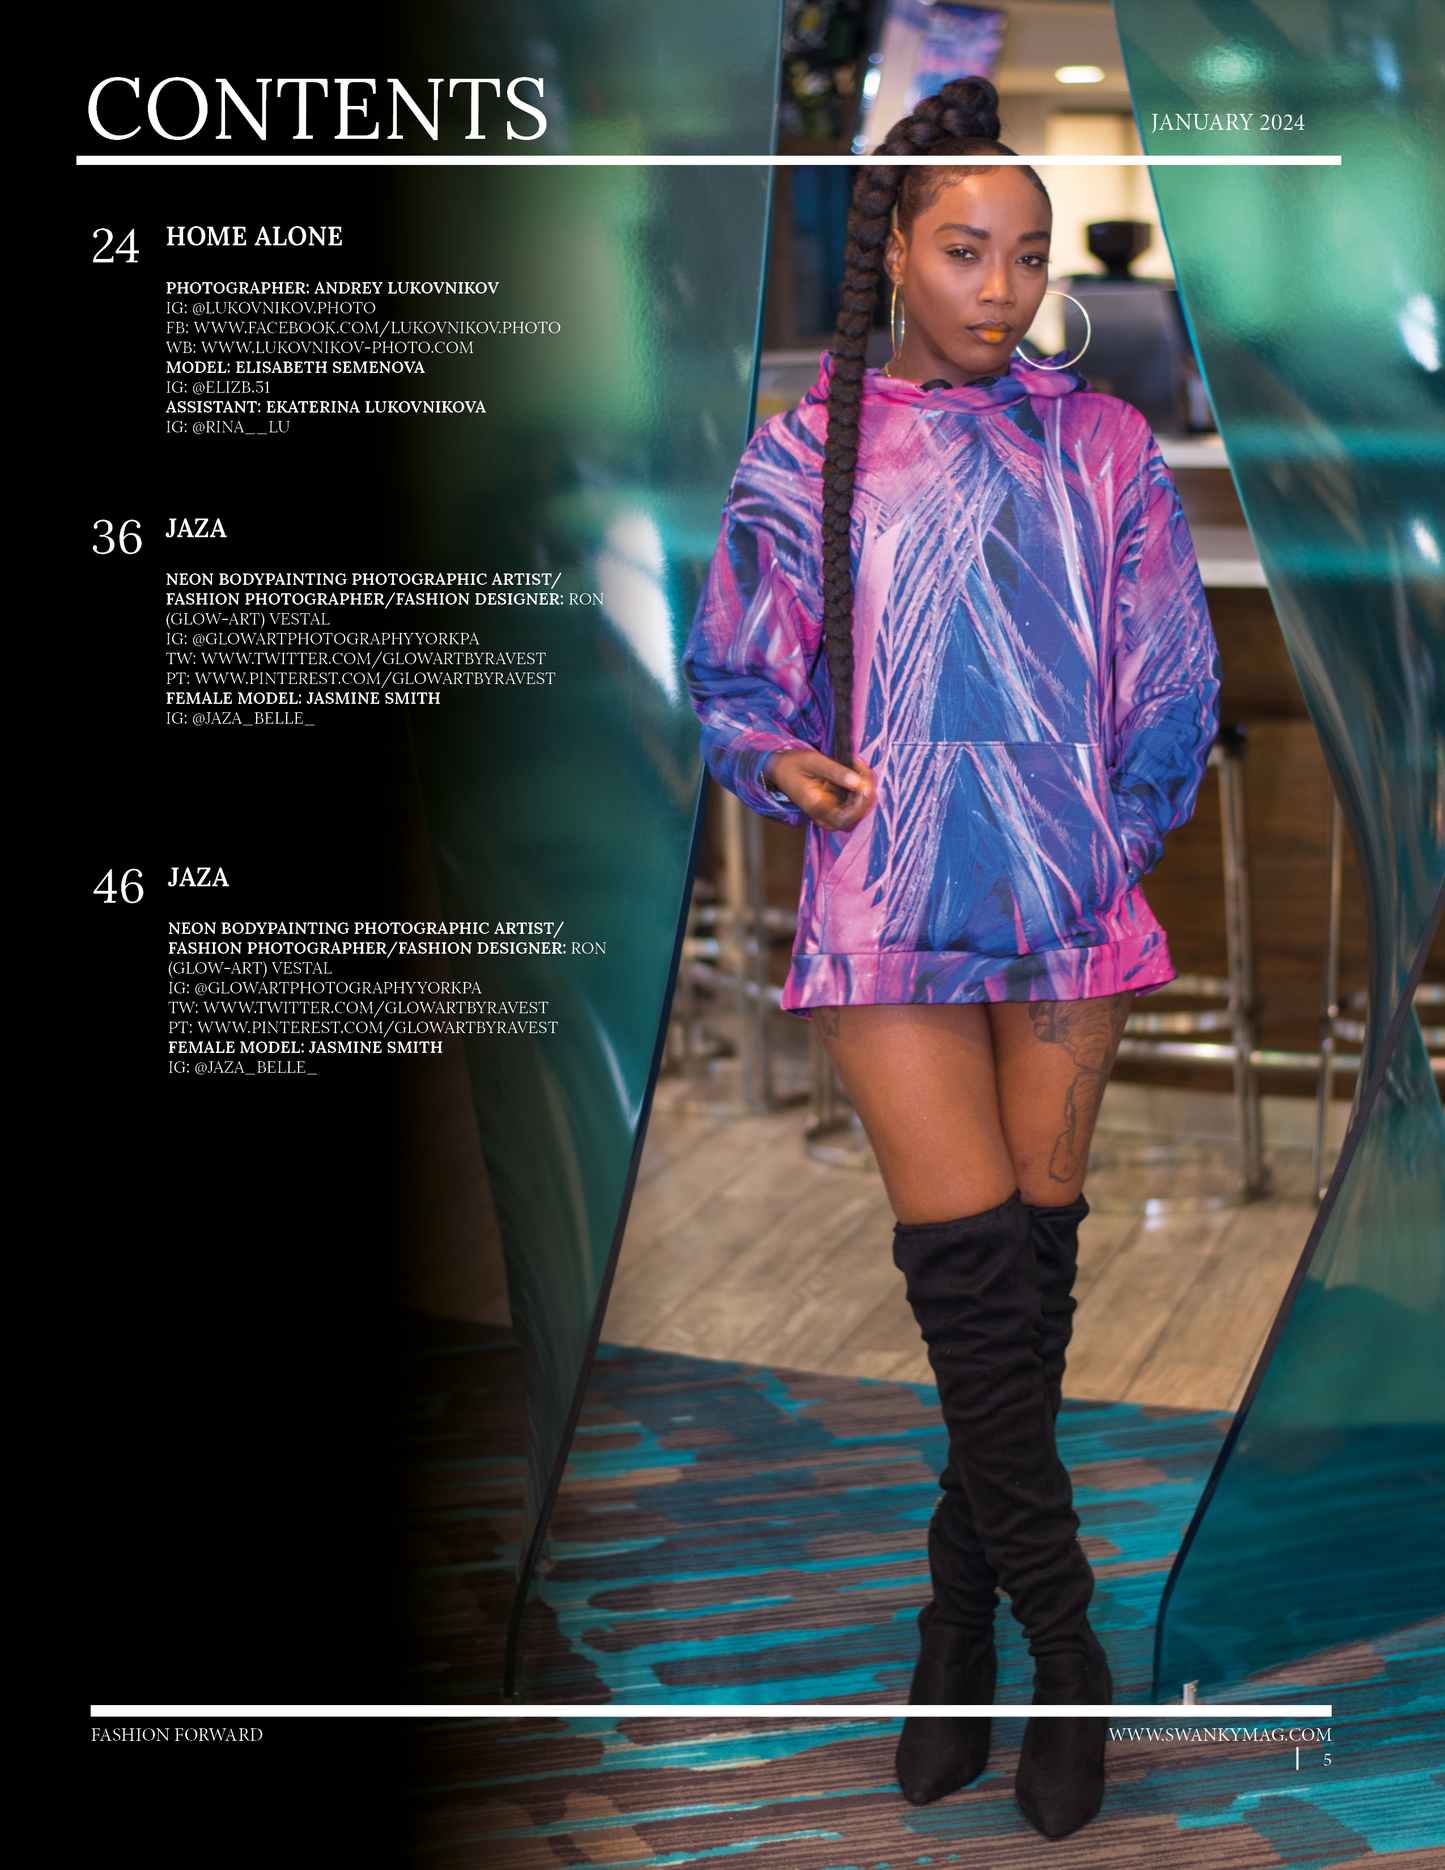 Swanky Fashion Magazine - January 2024: The Fashion Edition Issue 1